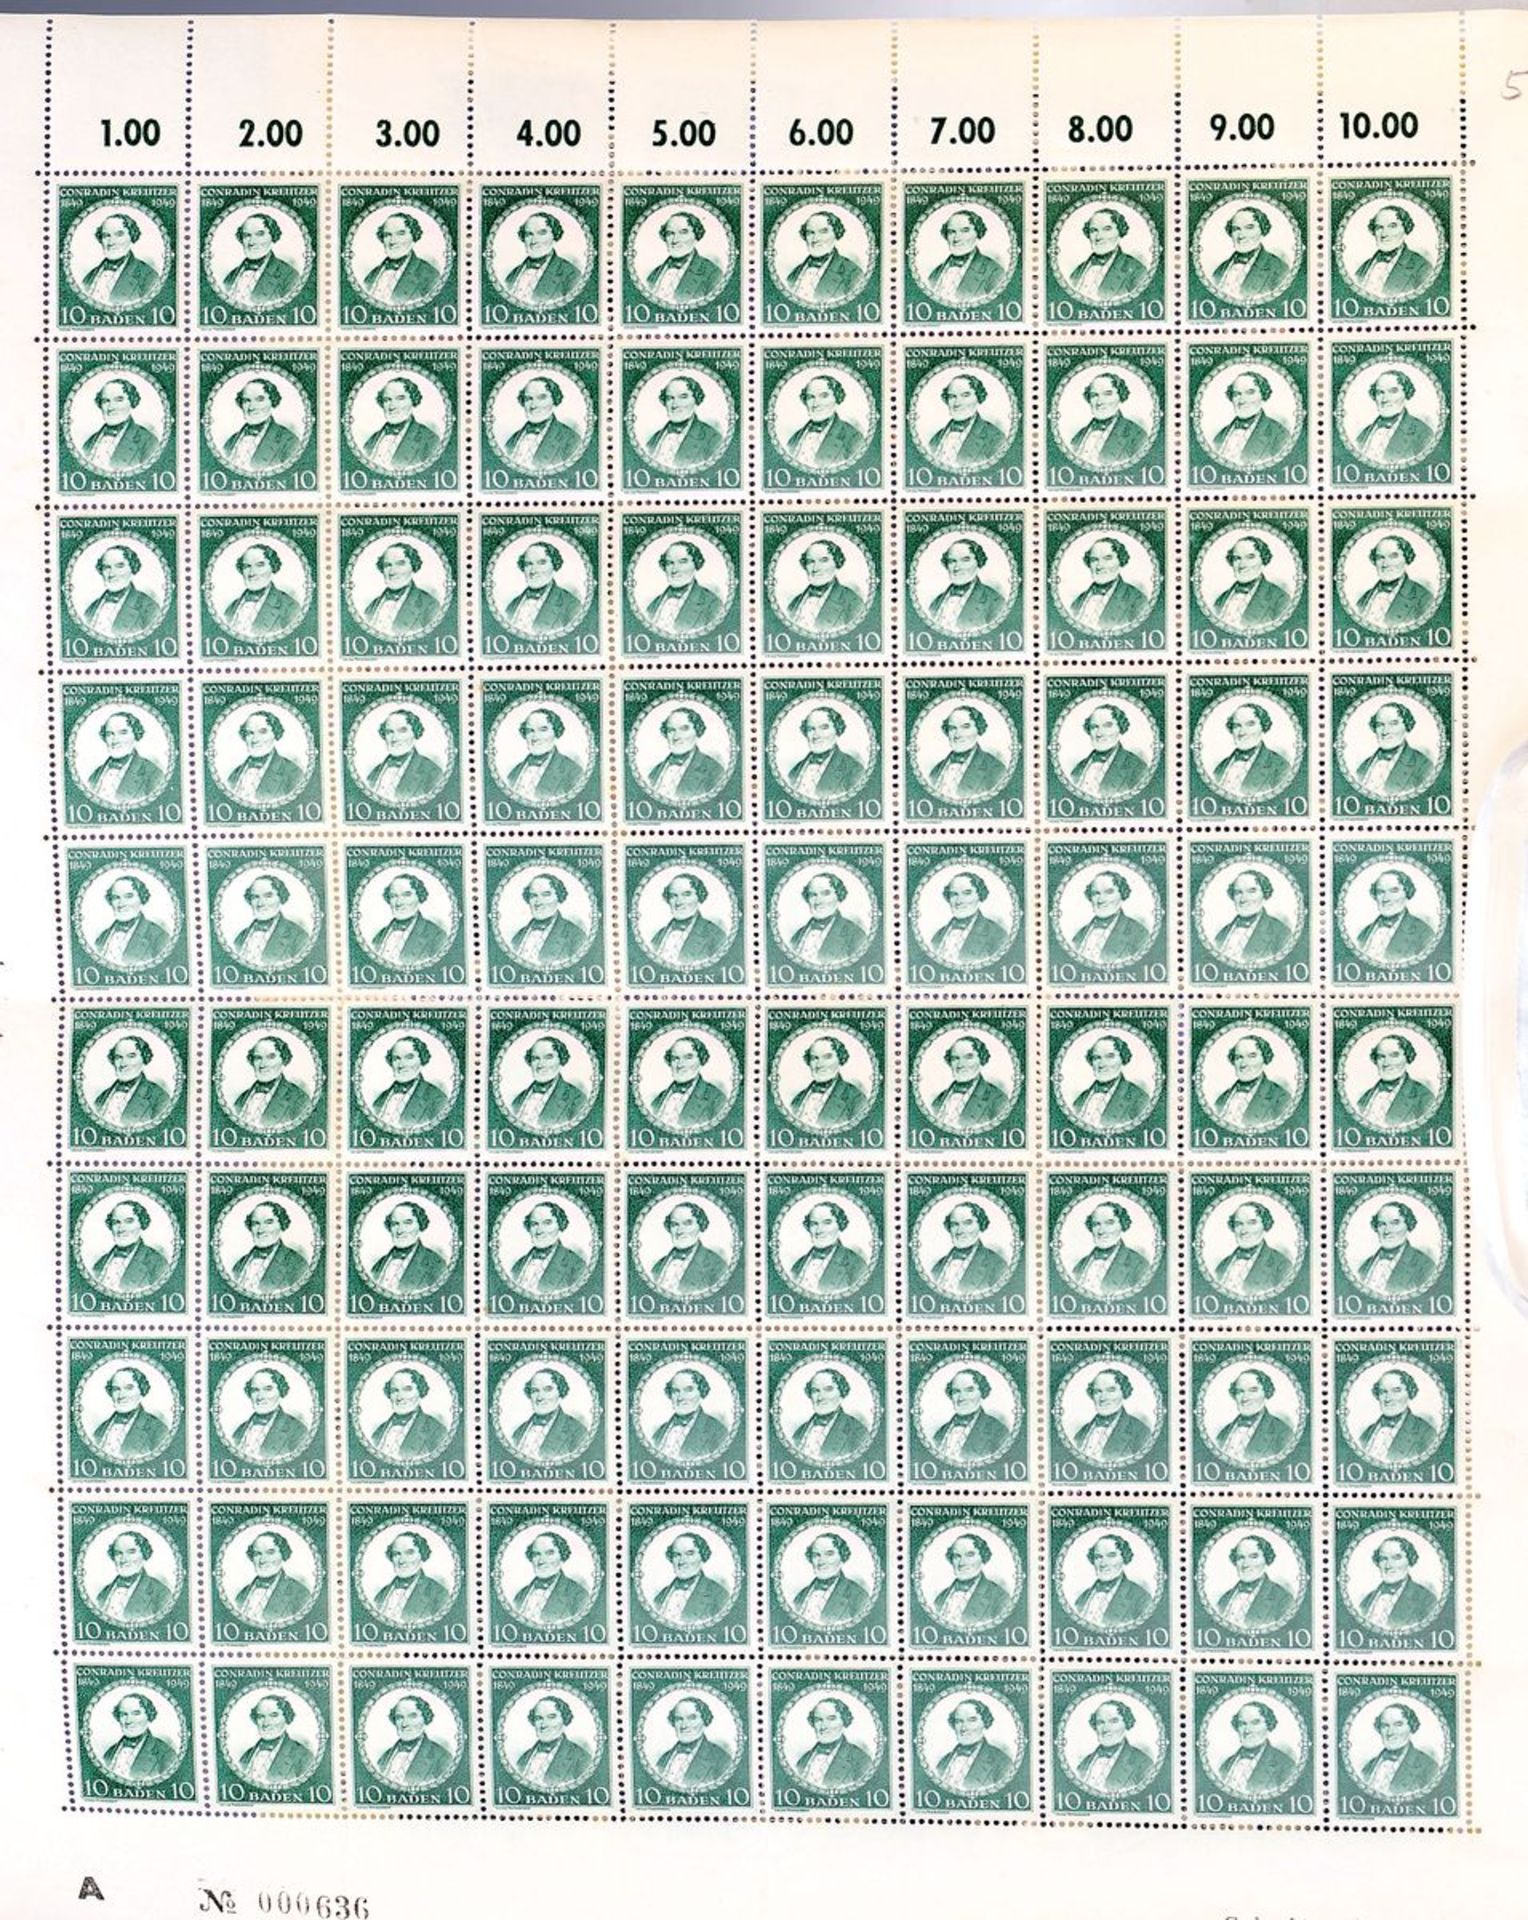 Briefmarken, Bogen Baden, Conradin Kreuzer, Bogen Nr. A No. 000636 gedruckt am 20.8.1949, selten,